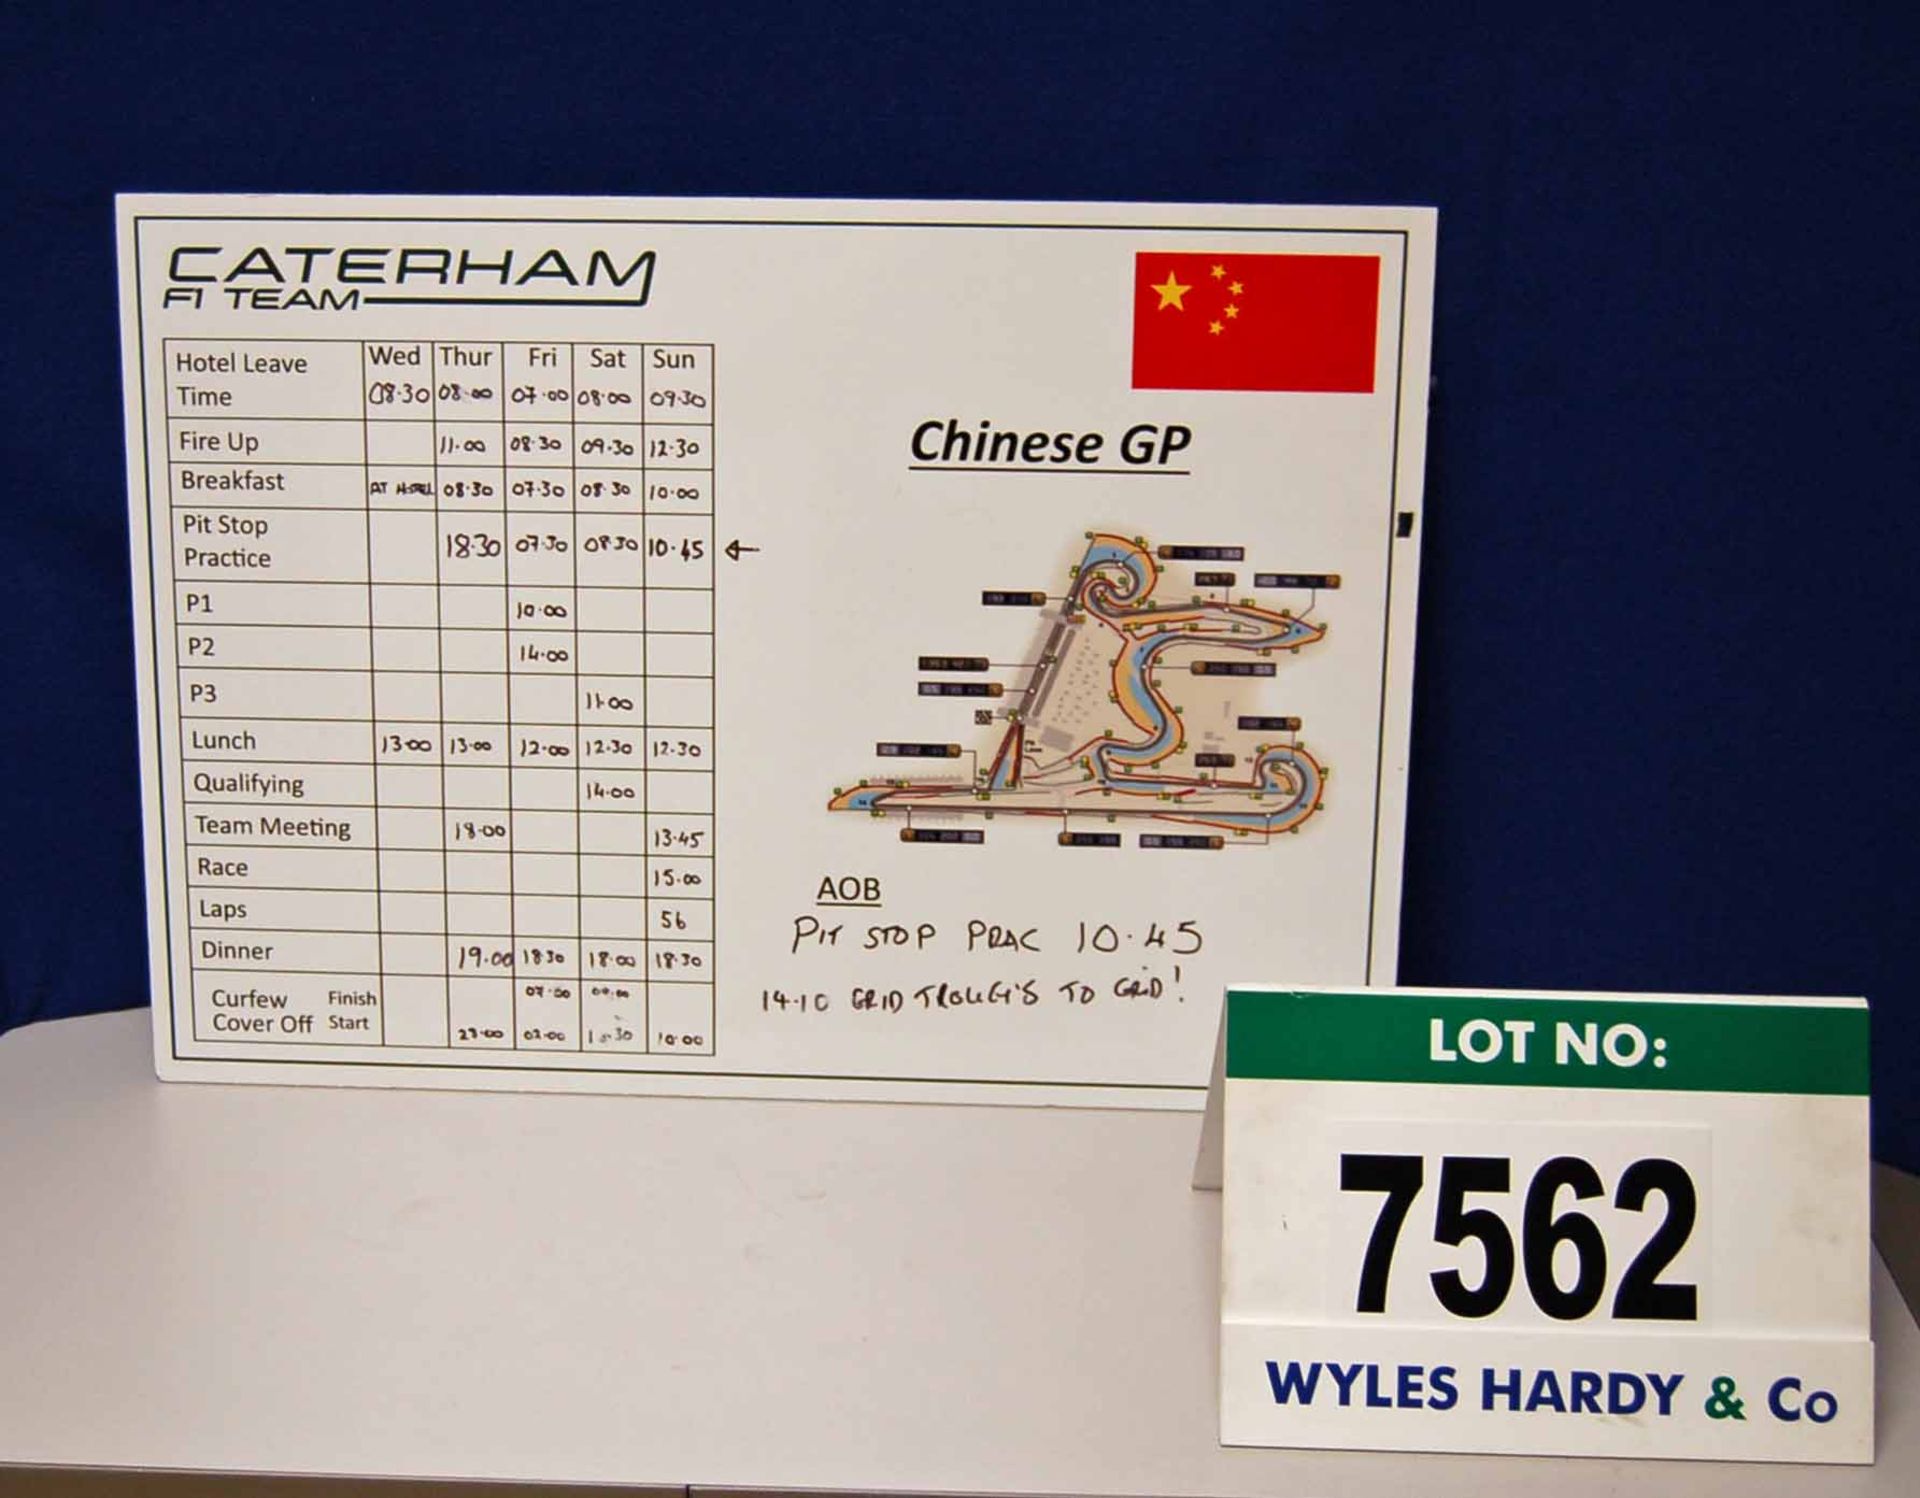 A CATERHAM F1 Team 500mm x 700mm Foamex Pit Crew Information Board - Chinese Grand Prix  Want it